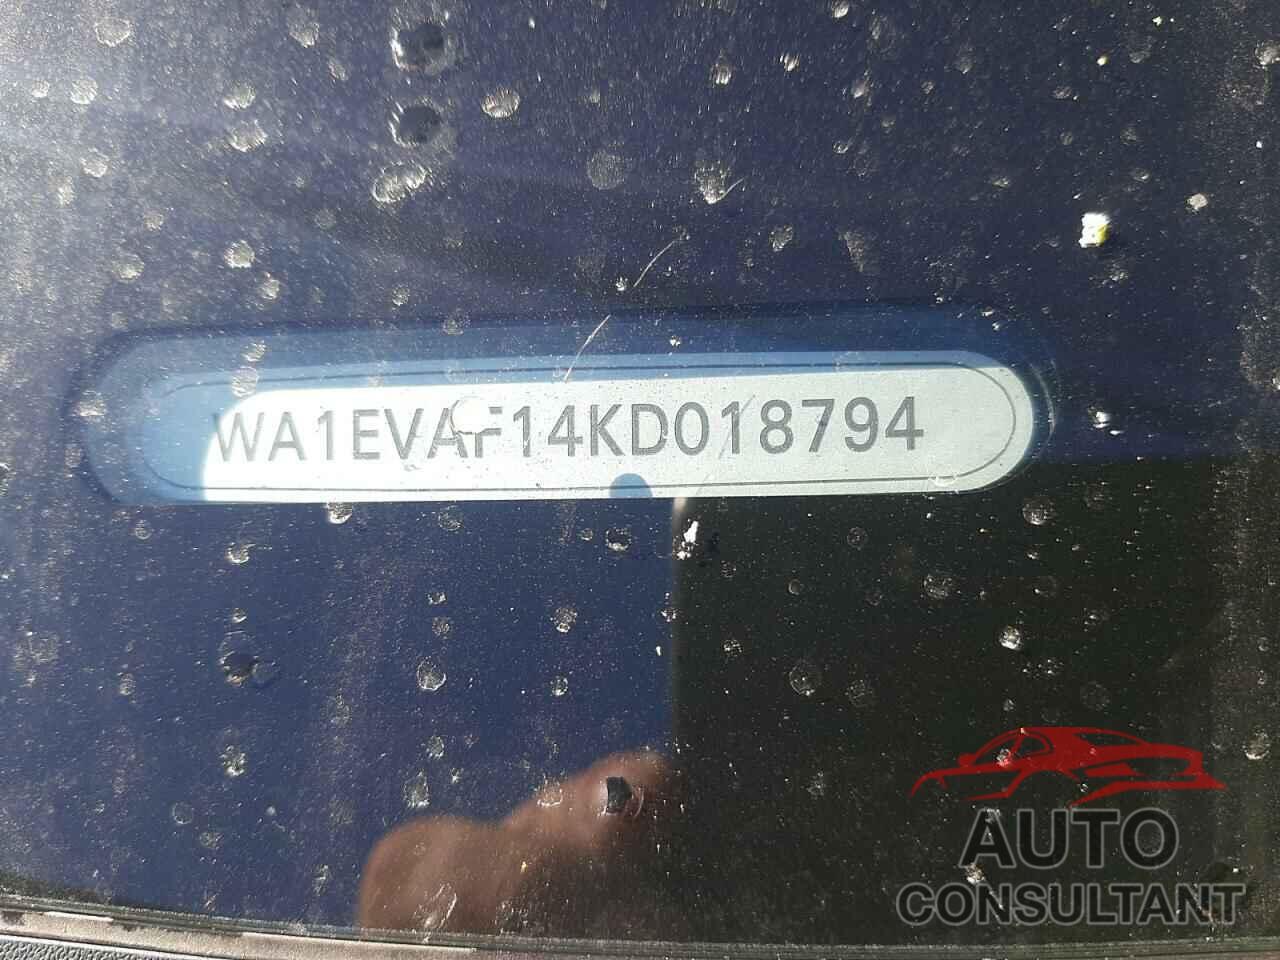 AUDI Q8 2019 - WA1EVAF14KD018794